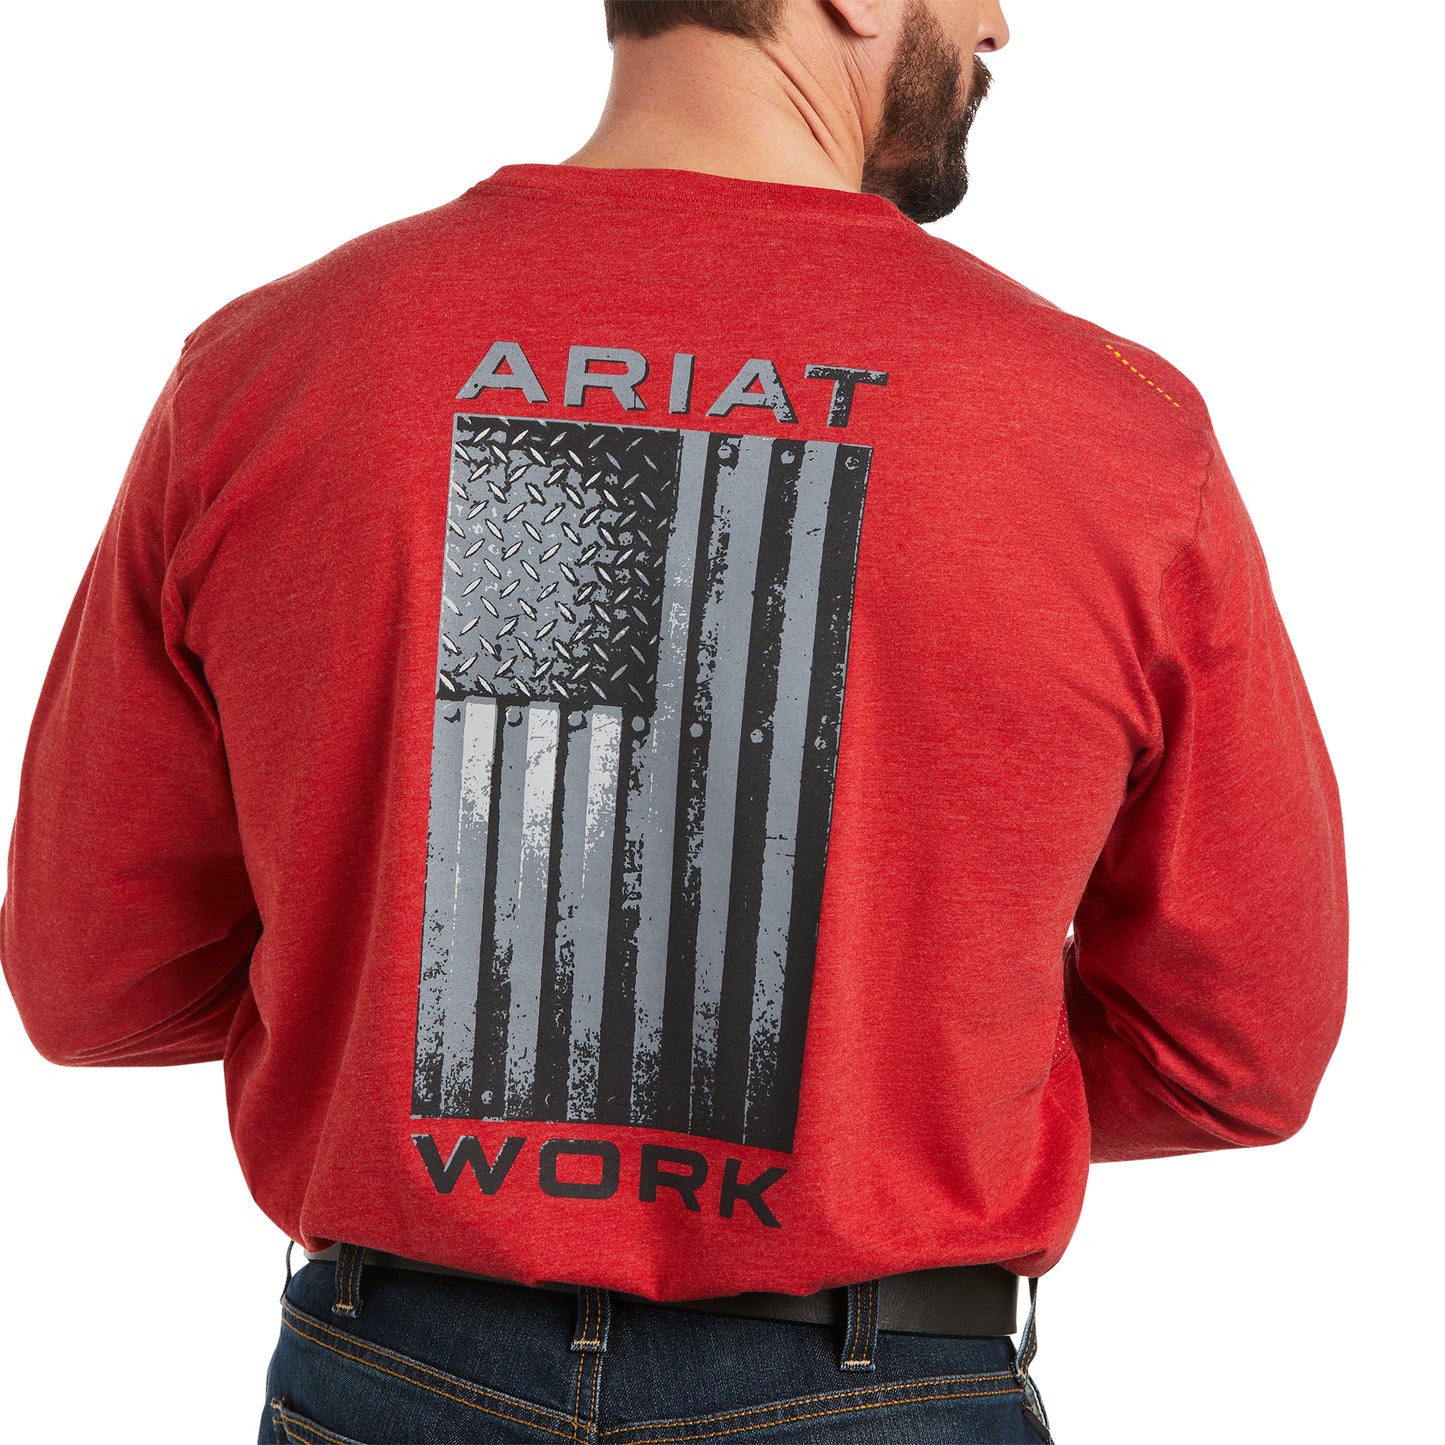 Ariat Men Rebar Workman Alloy Red Flag Graphic Tee Shirt 10037705